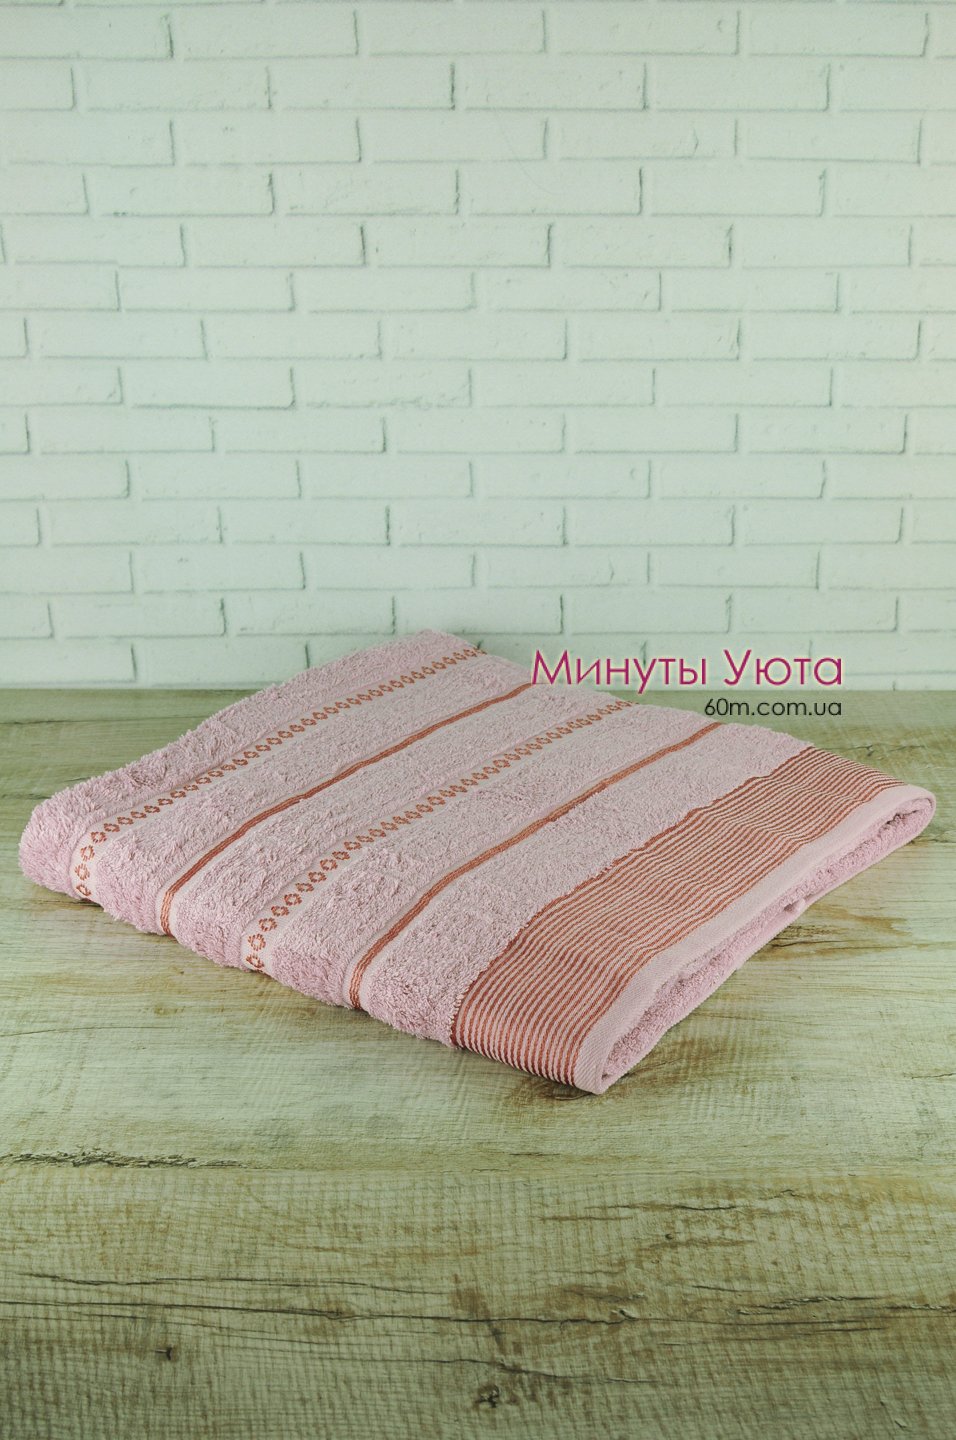 Полотенце для лица в розовом цвете 